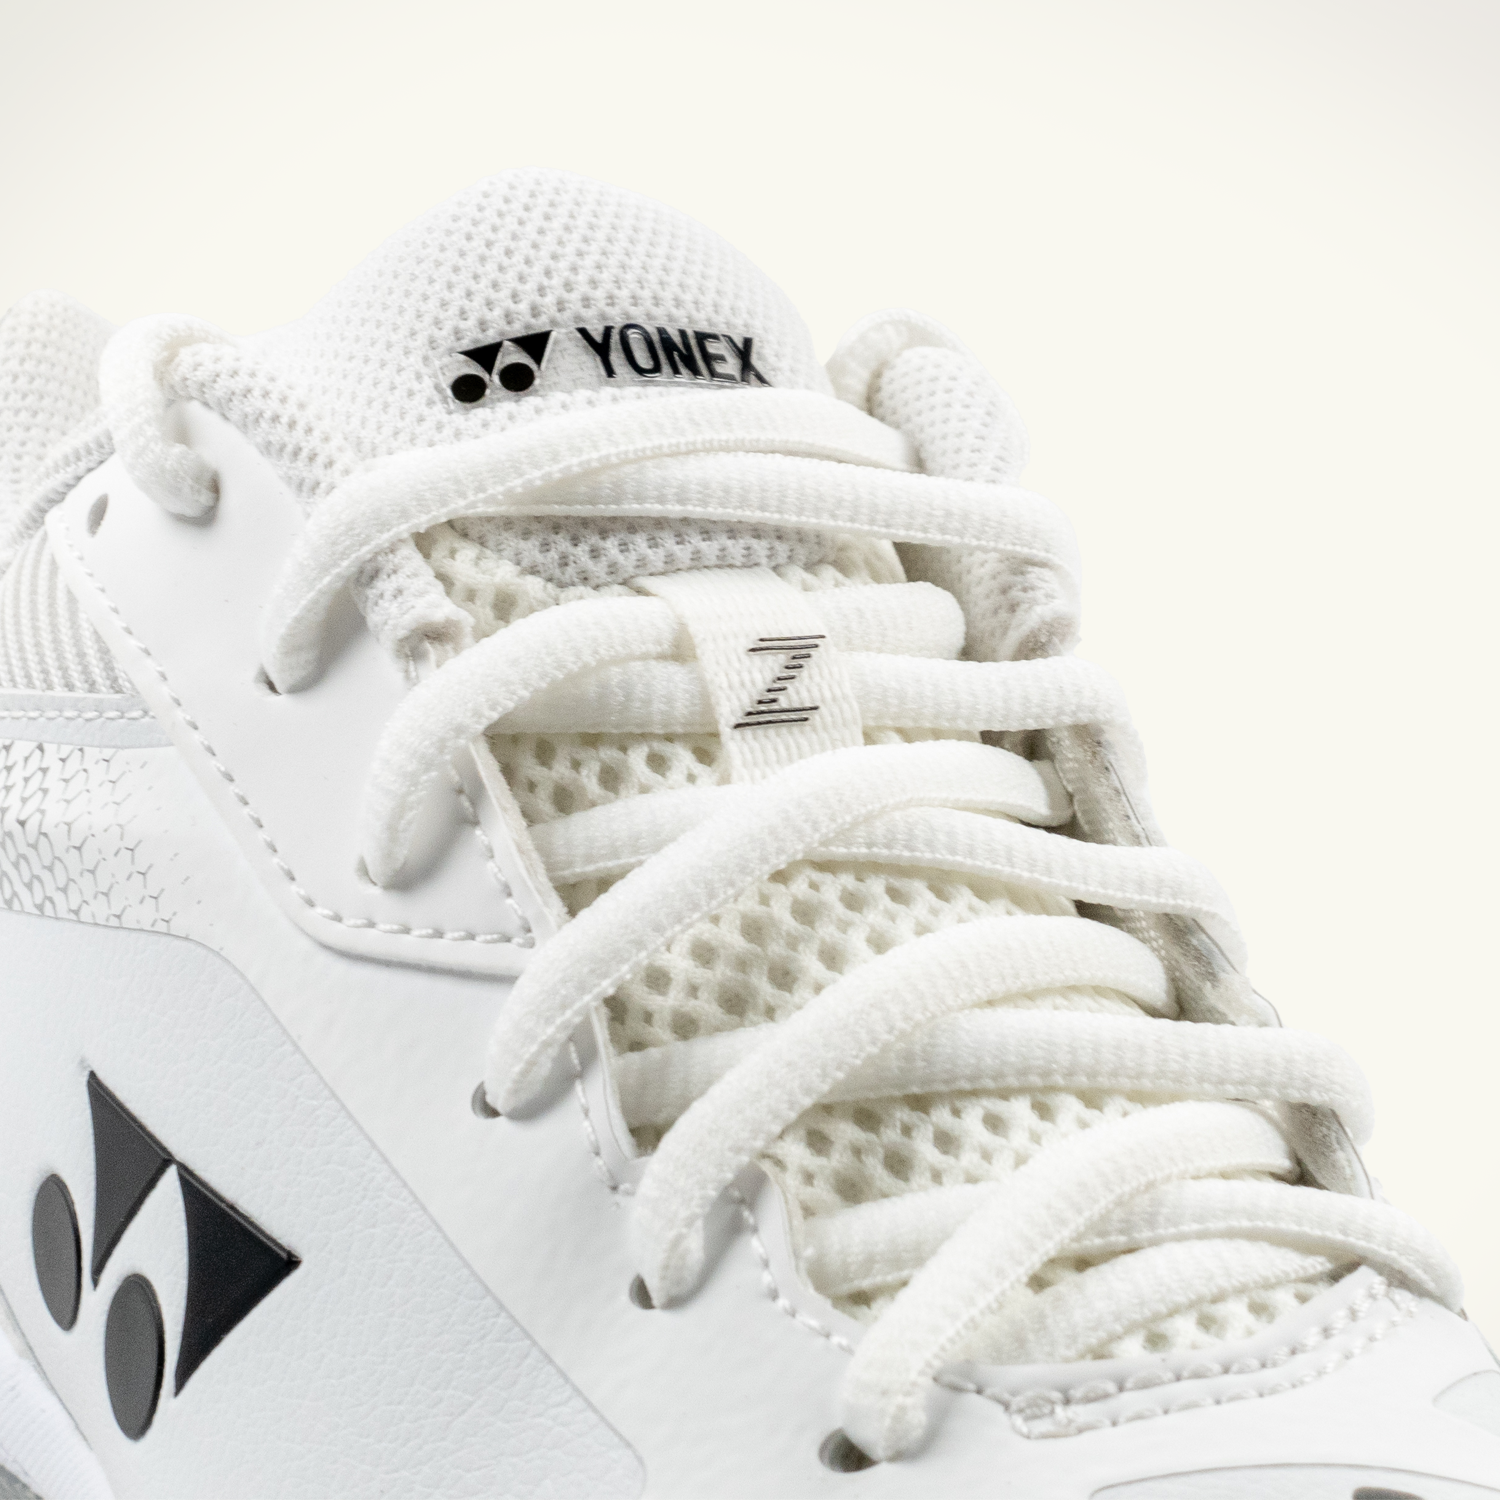 Yonex Power Cushion 65 Z3 Women's Limited Edition Court Shoes (Pure White)